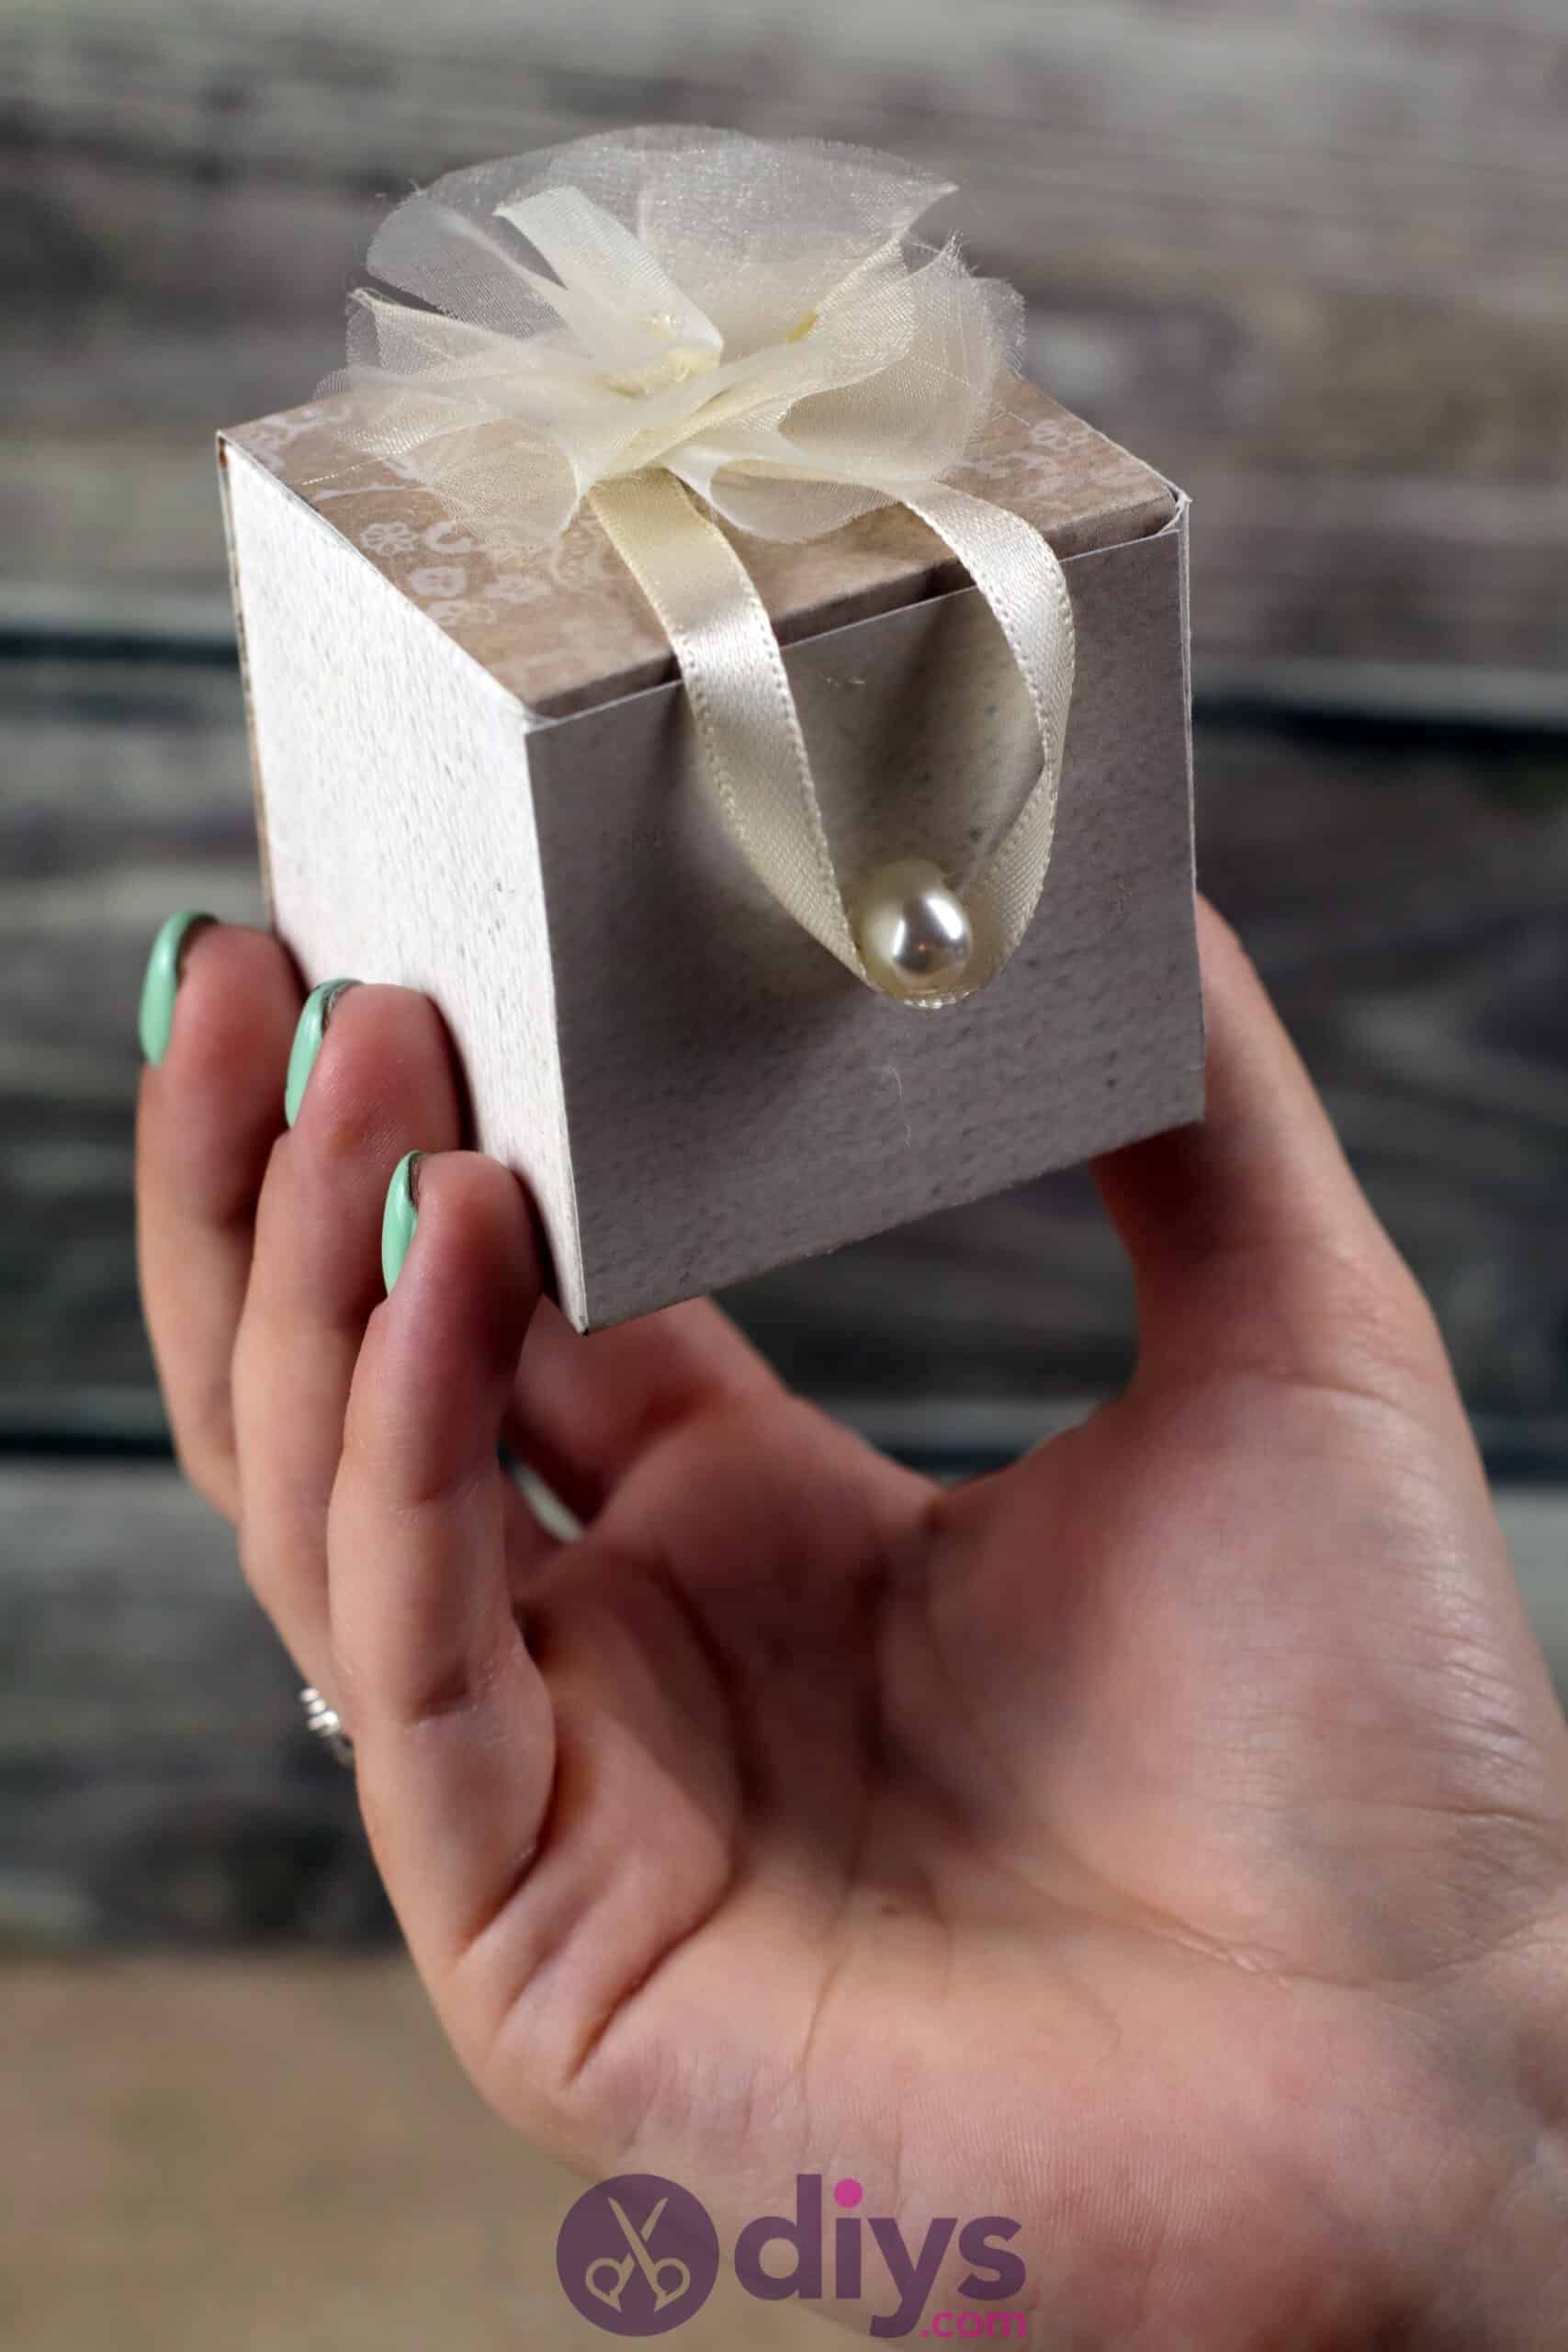 Diy mini wedding gift box project